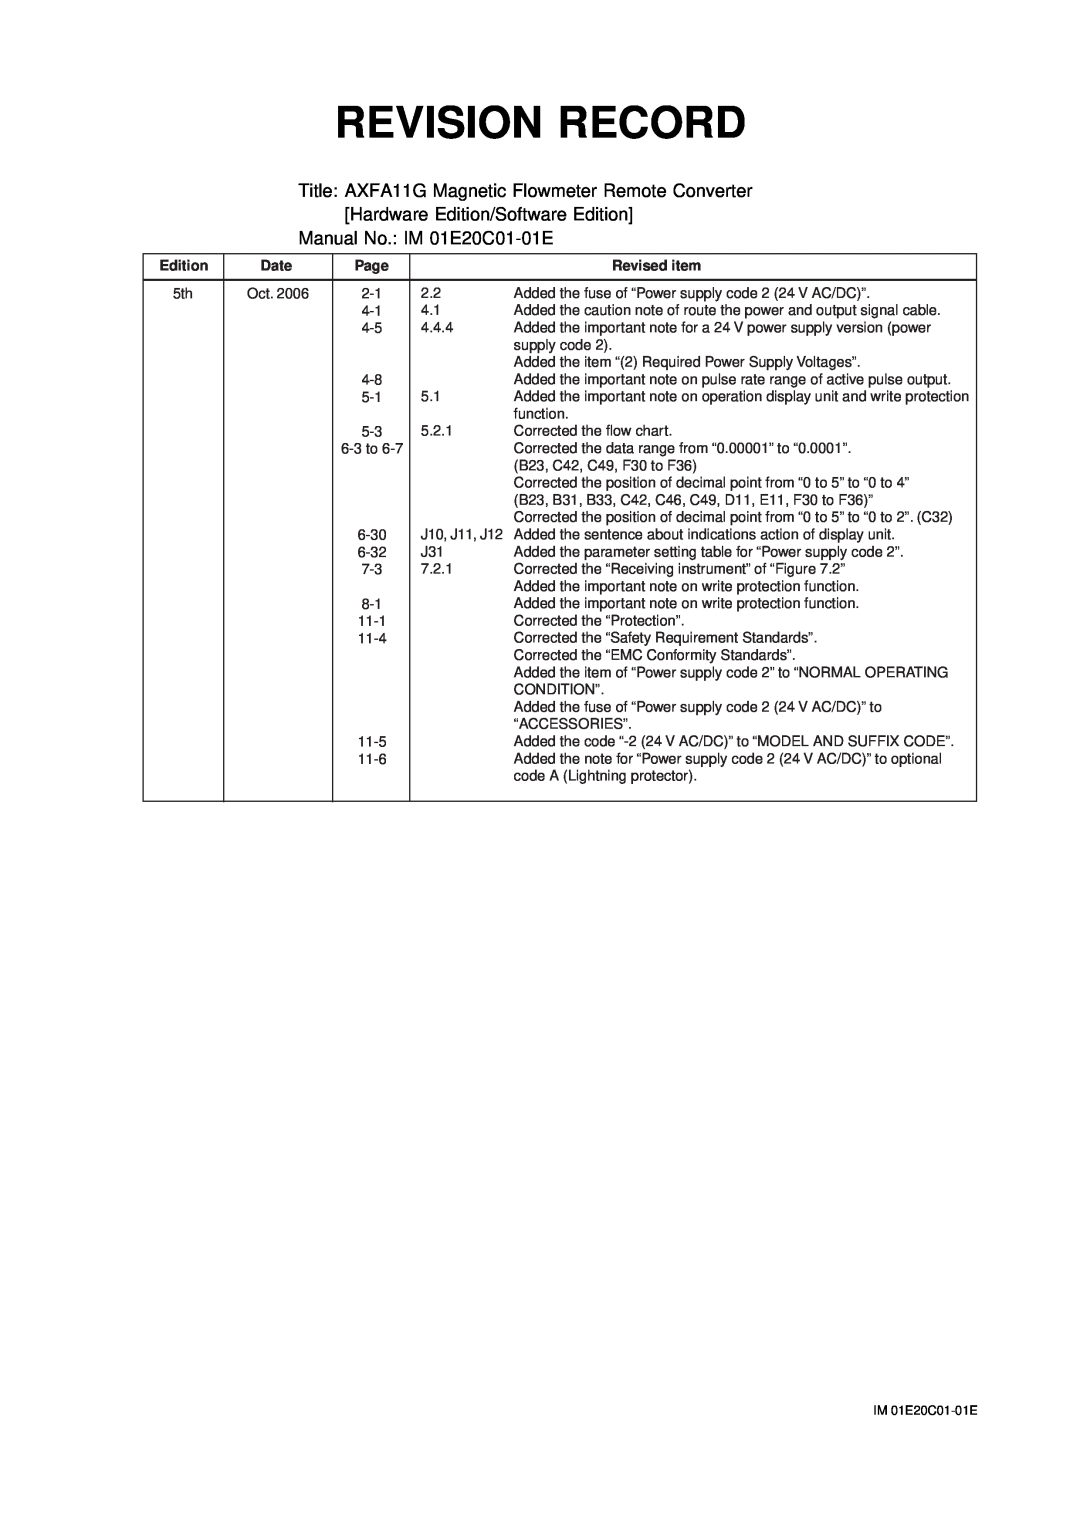 APC user manual Revision Record, Title AXFA11G Magnetic Flowmeter Remote Converter 